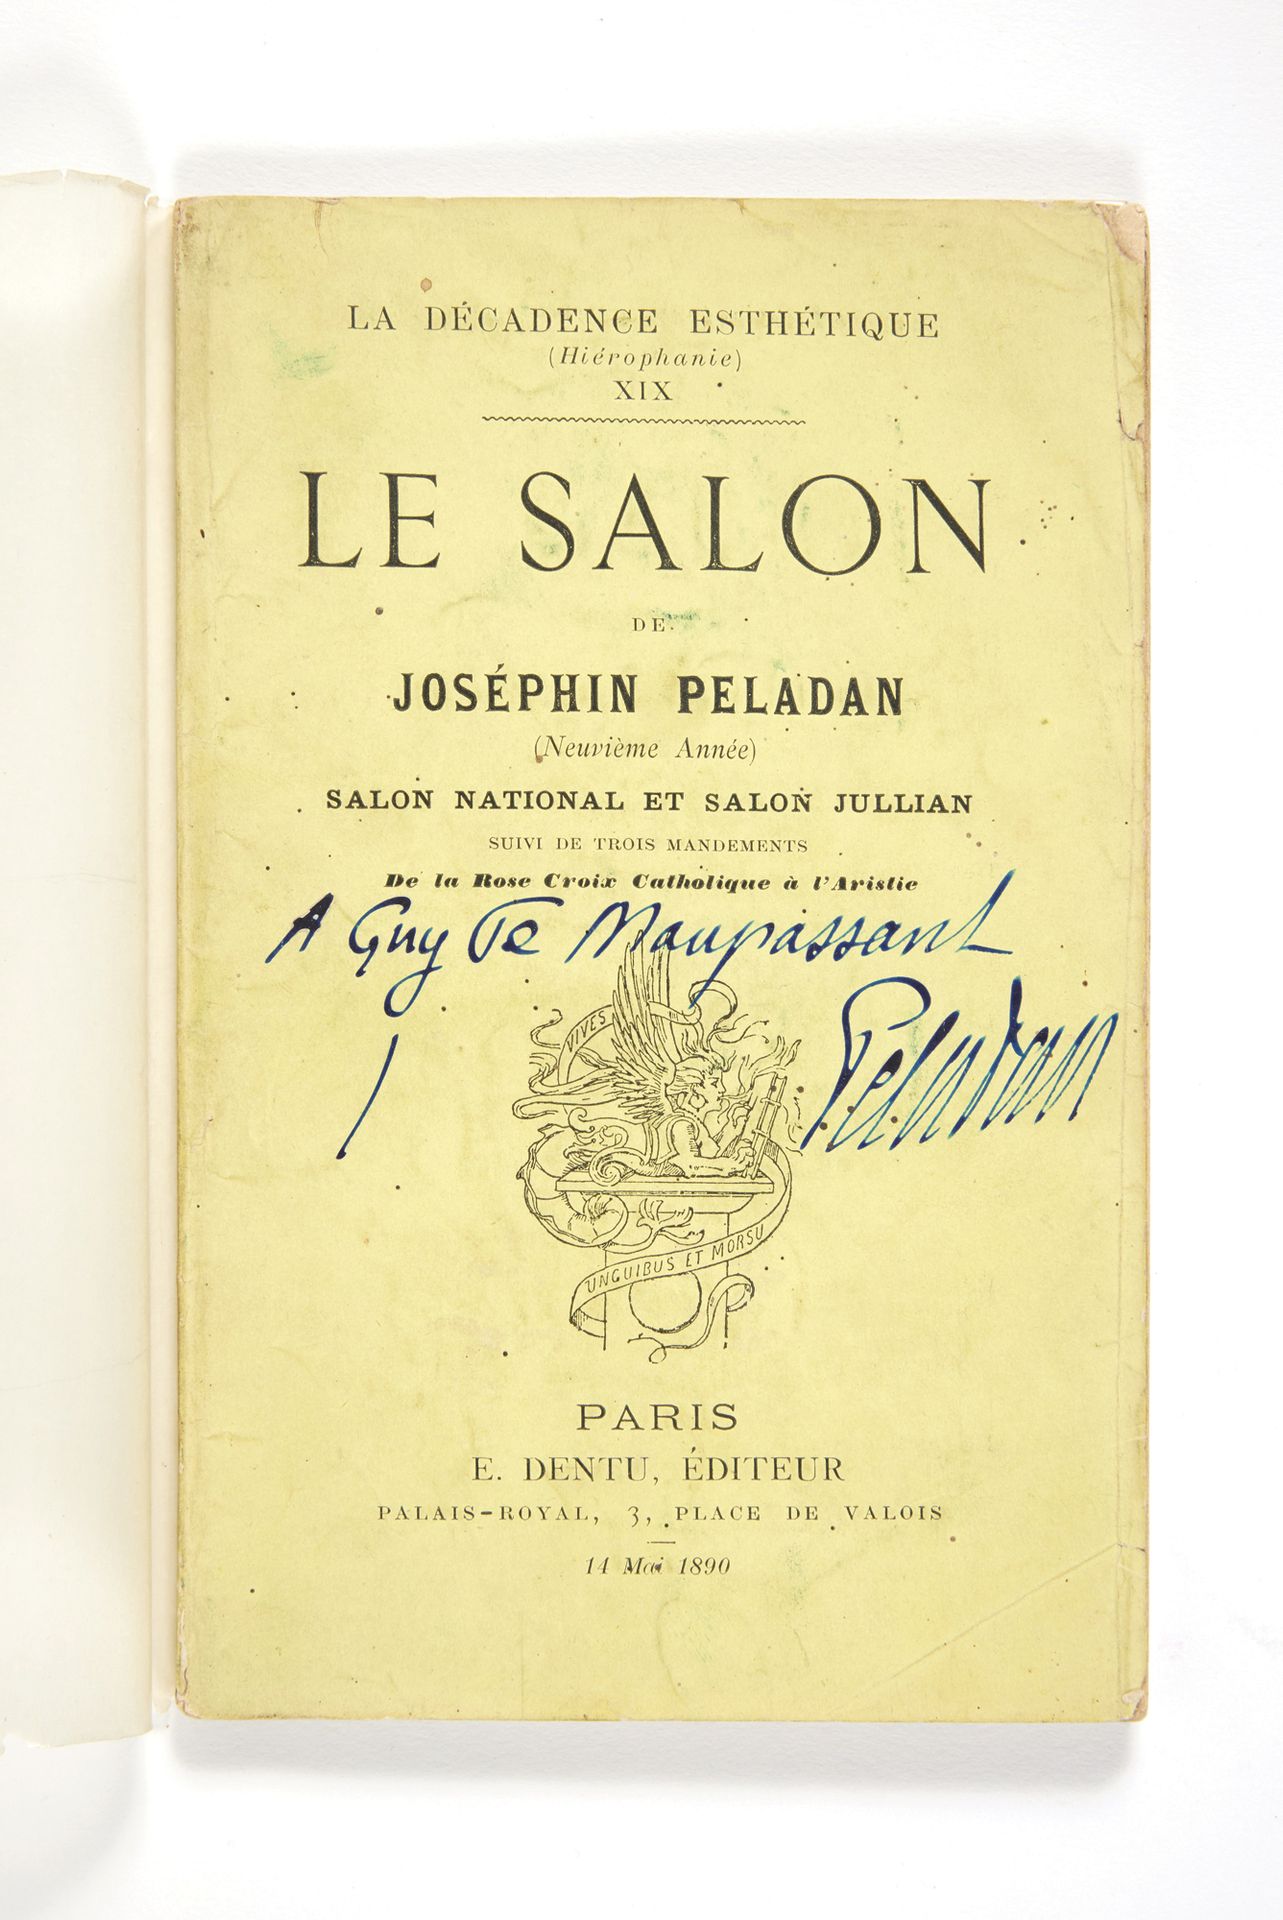 PELADAN, Joséphin. Le Salon de Péladan. La décadence Esthétique XIX. Salon natio&hellip;